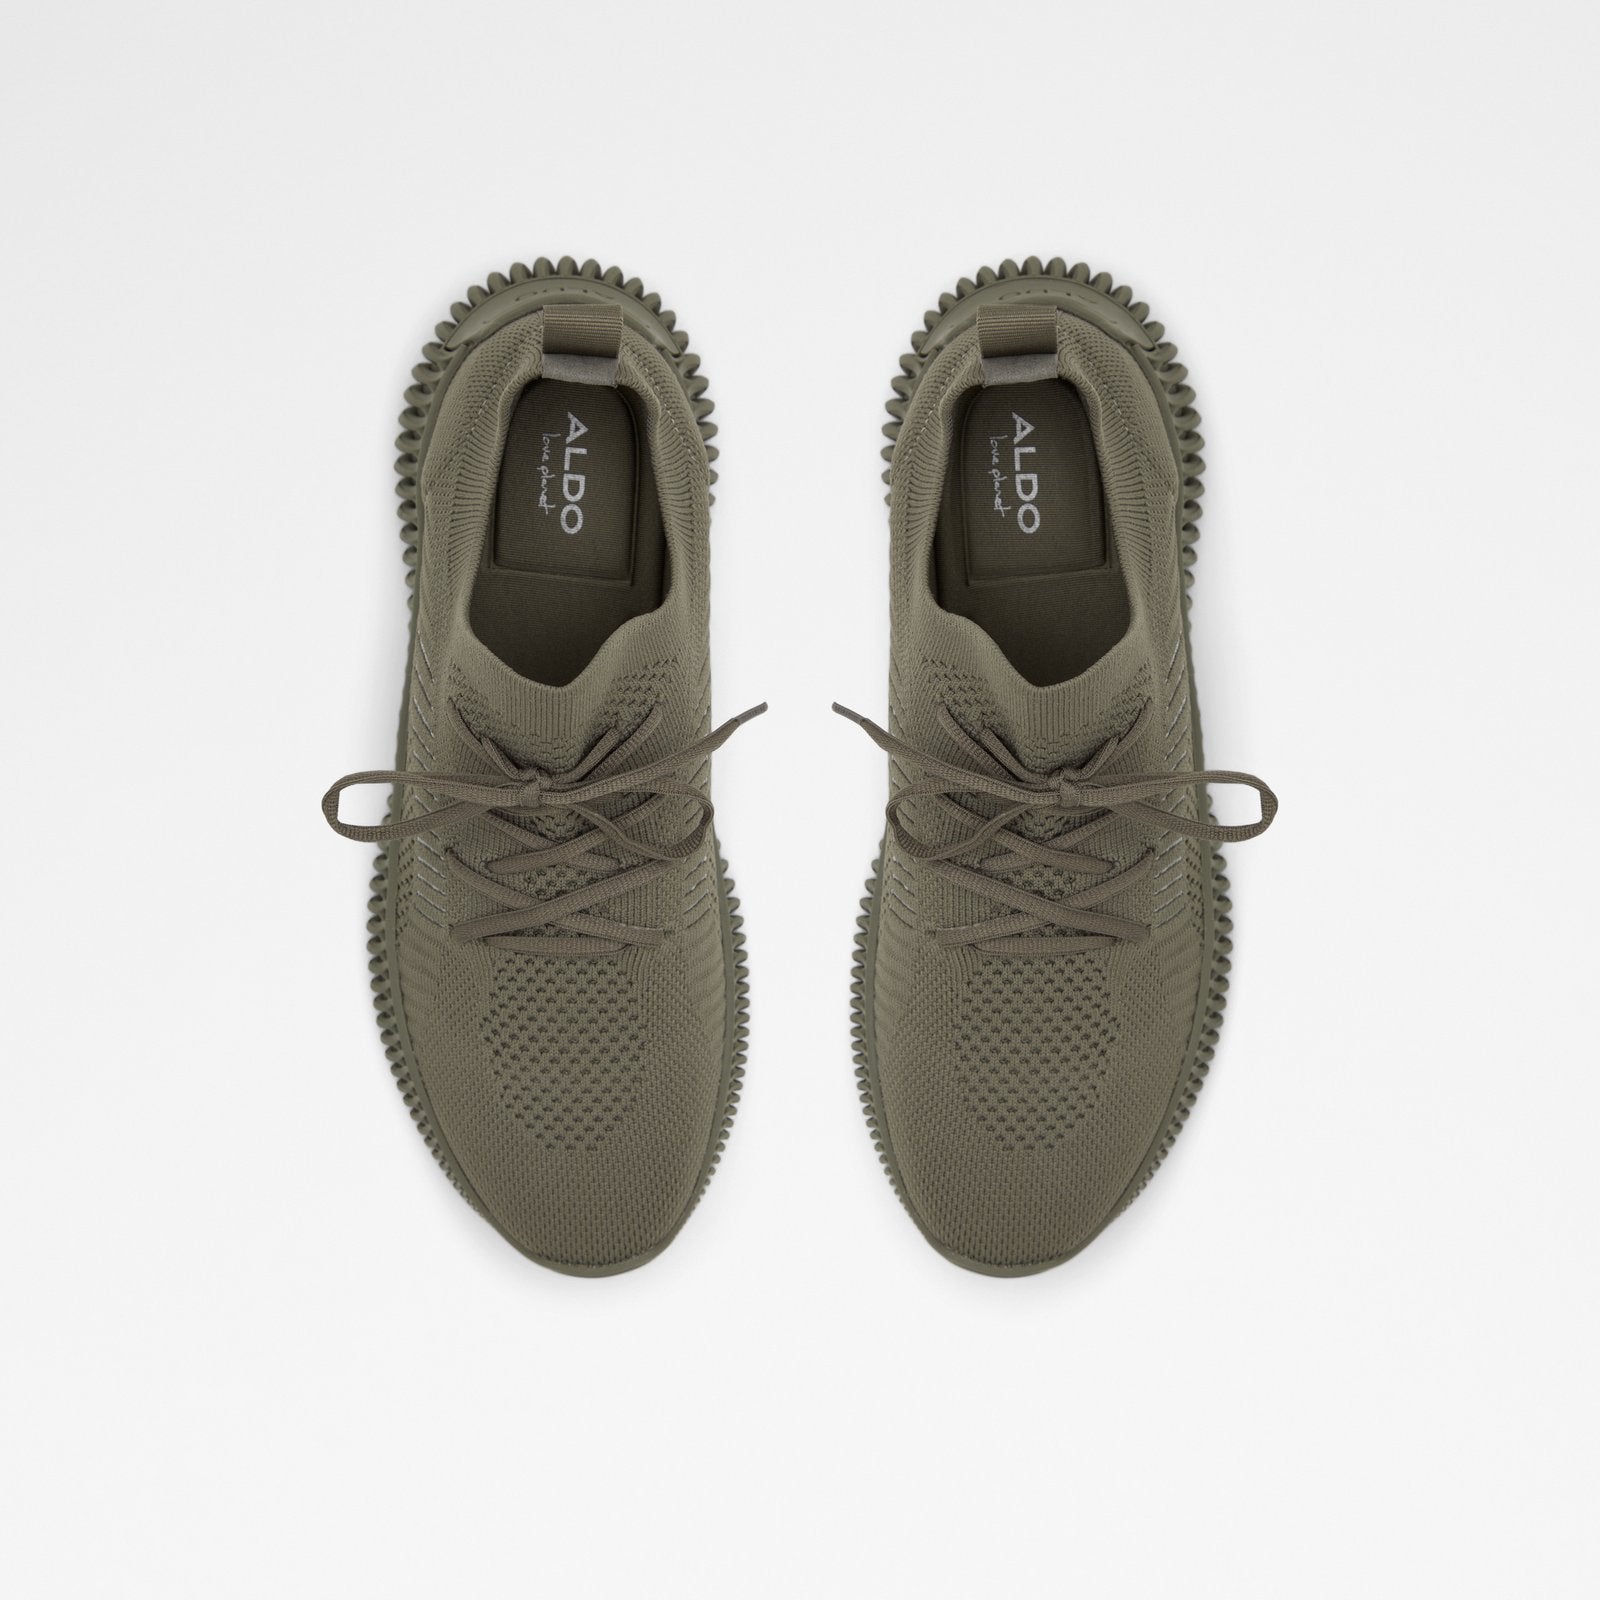 Gilgai / Sneakers Men Shoes - Green - ALDO KSA